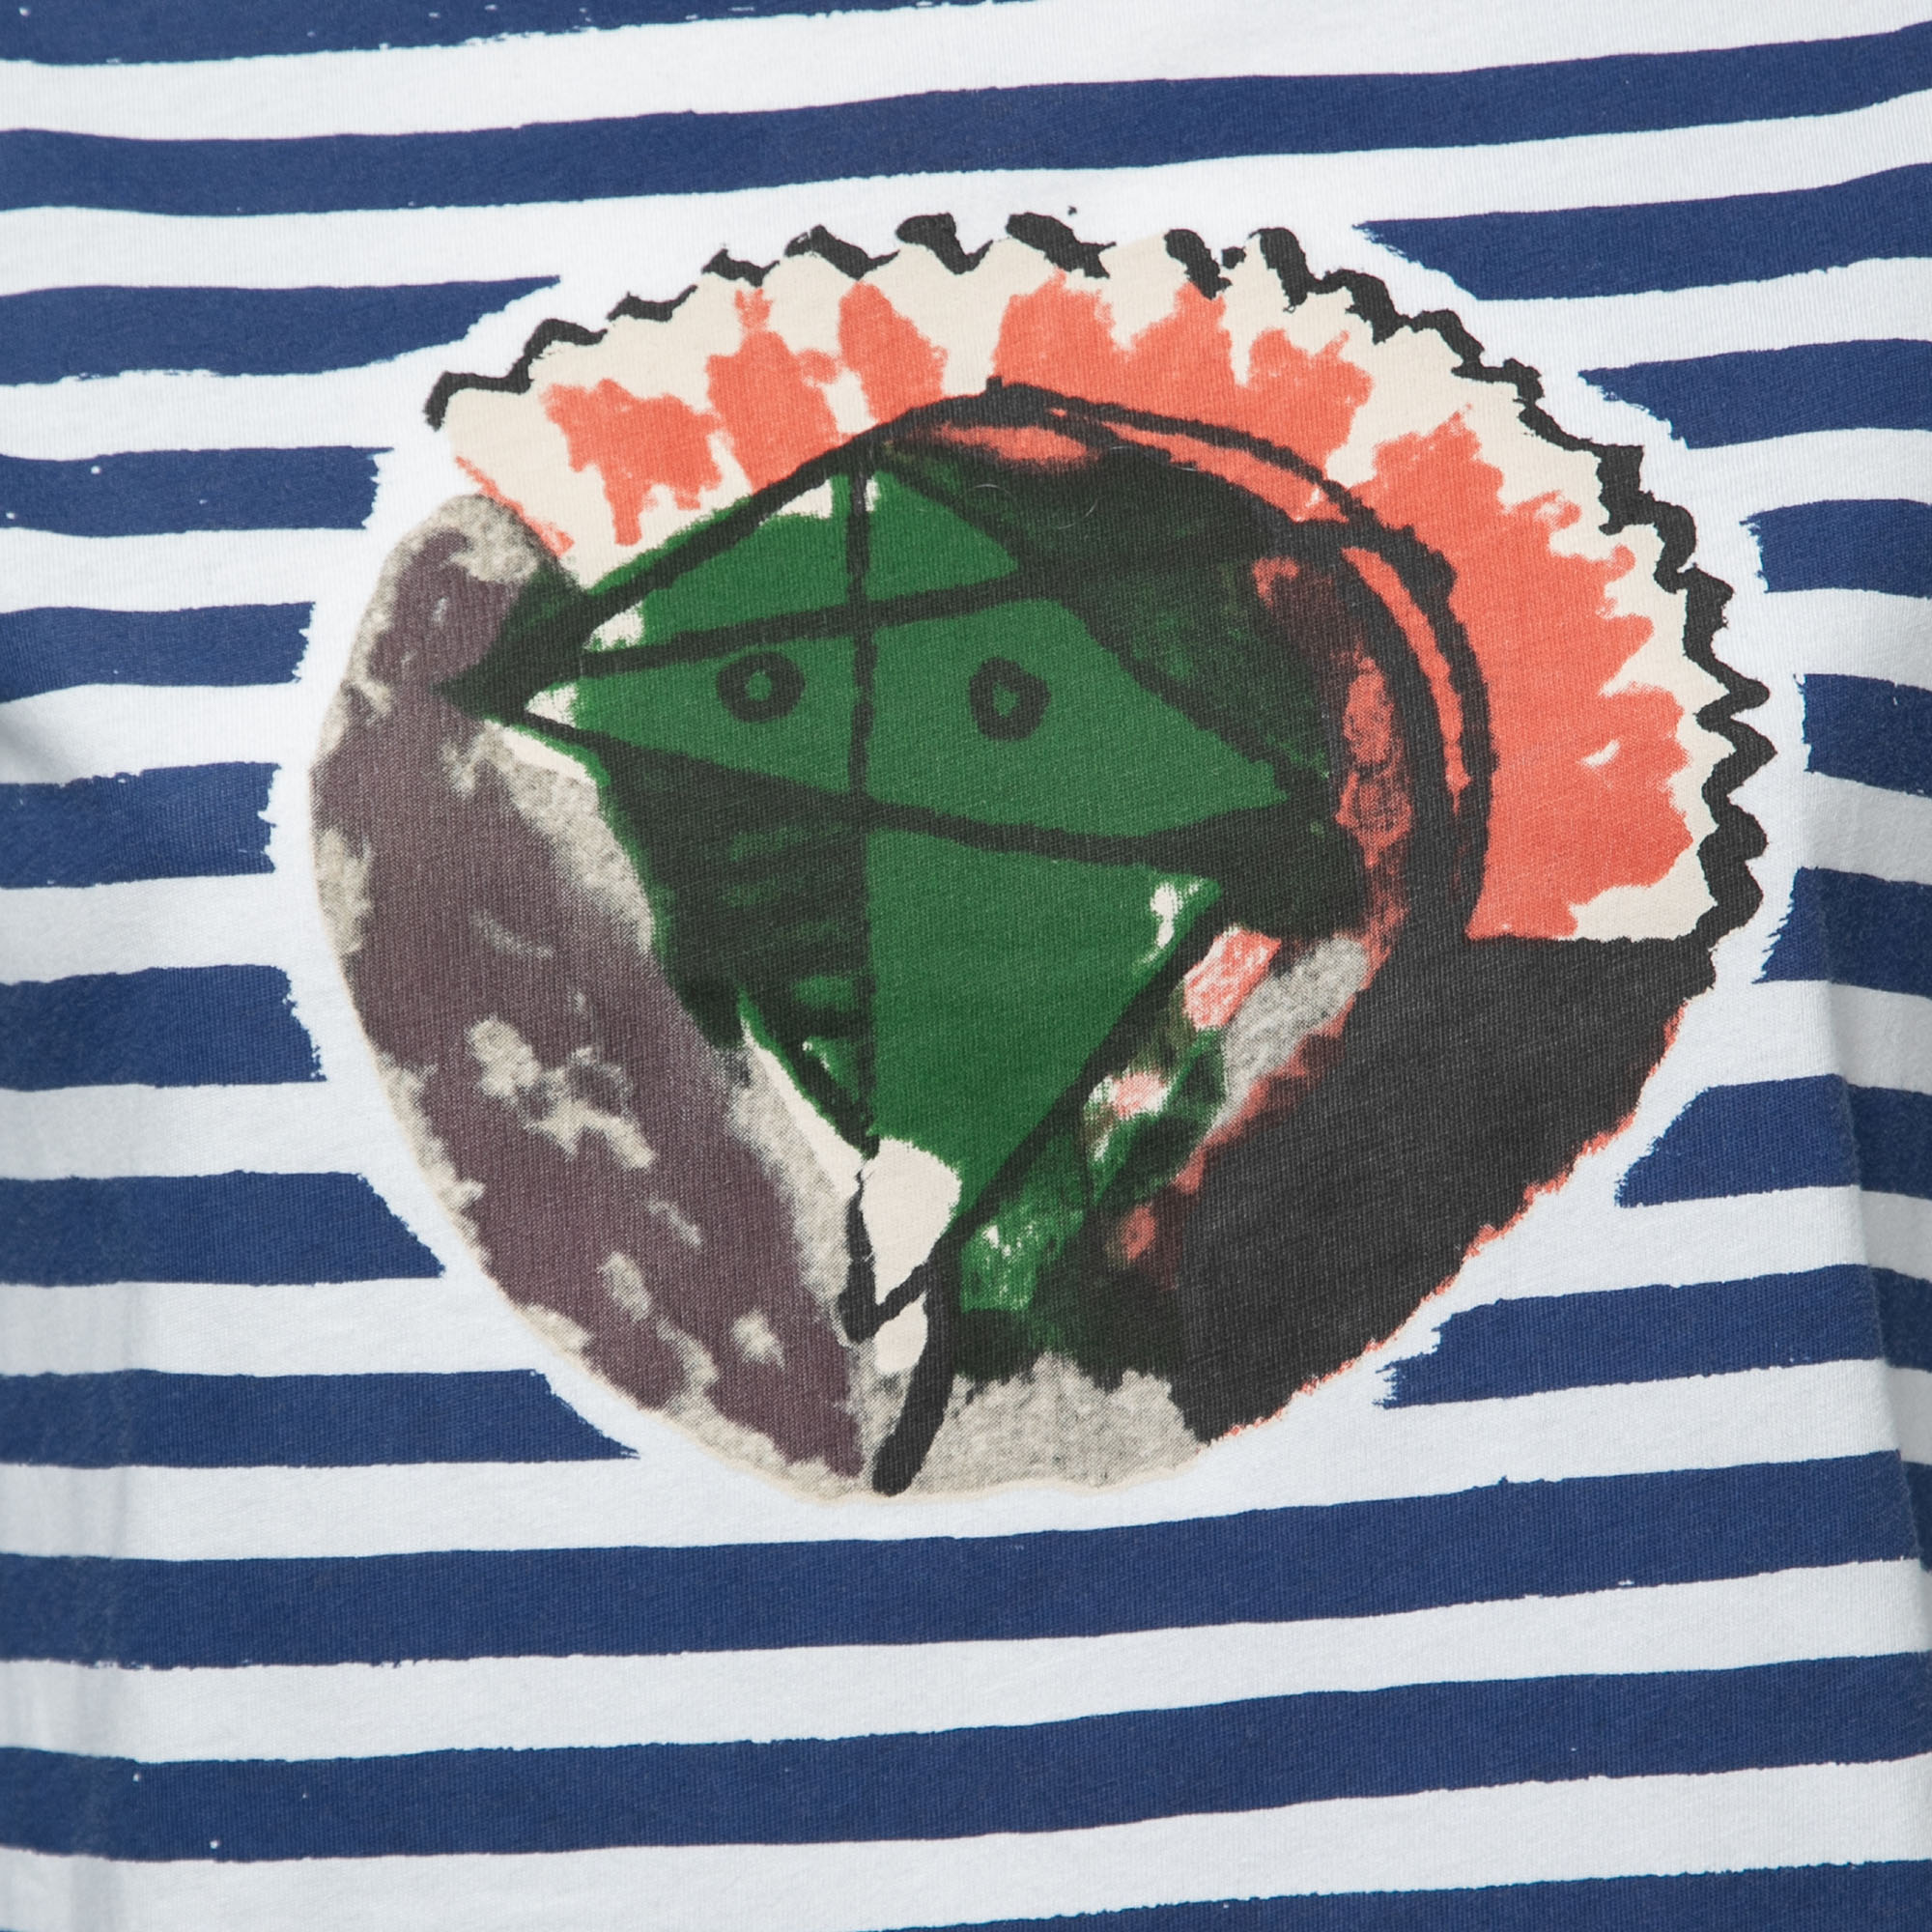 Burberry Blue Graphic Stripe Print Cotton Boat Neck T-Shirt XS